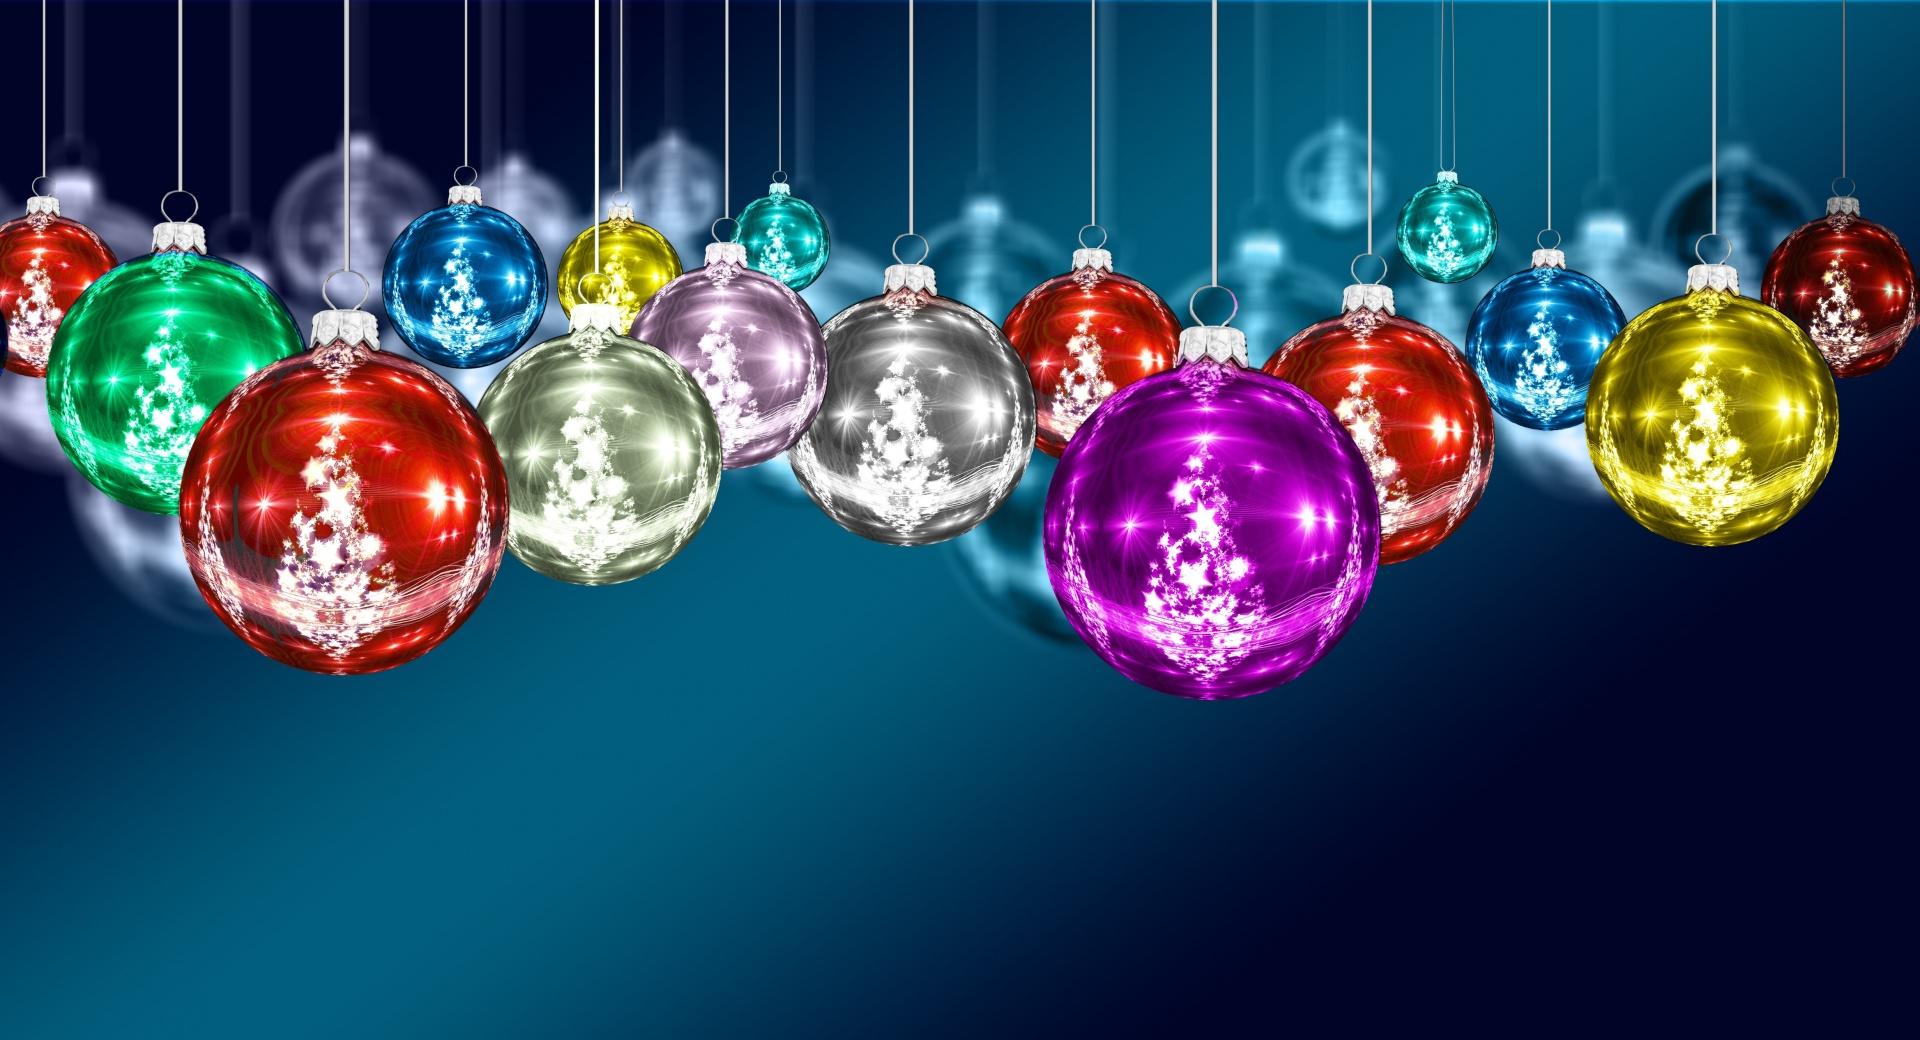 Colorful Christmas Balls wallpapers HD quality